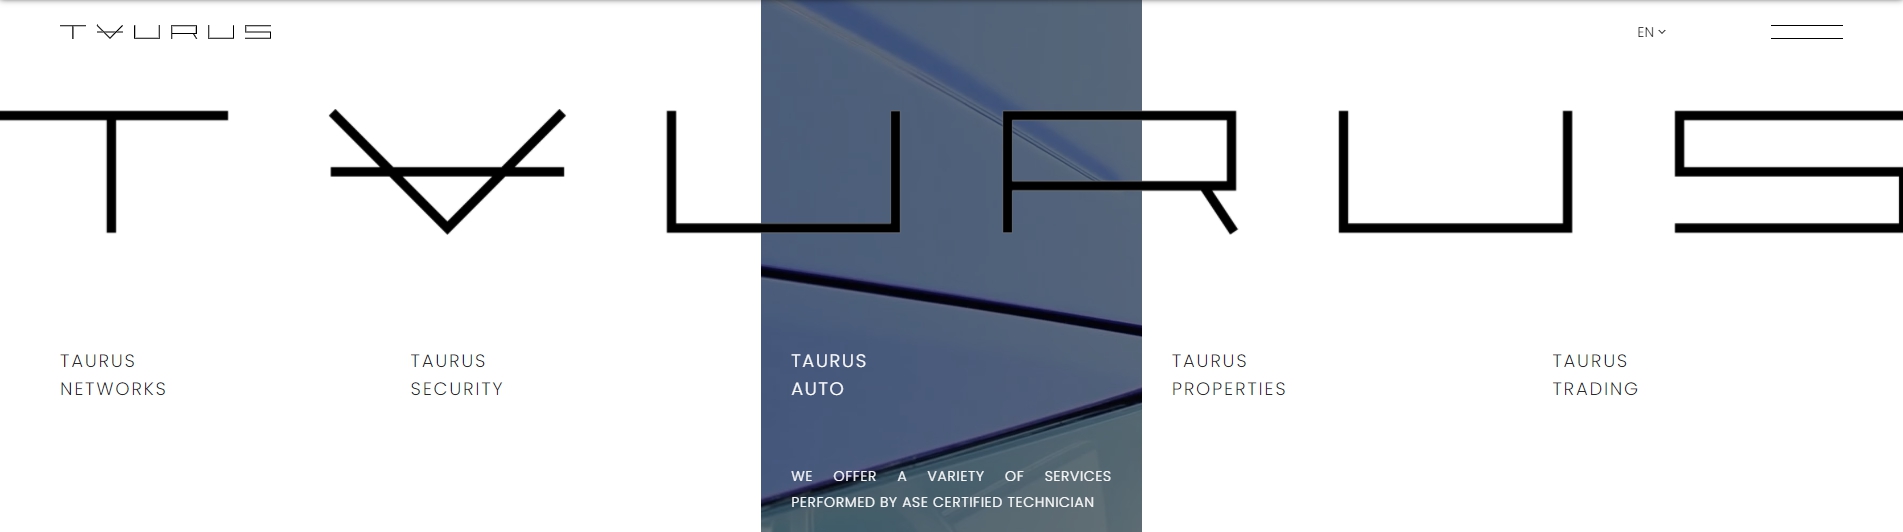 taurus investment group